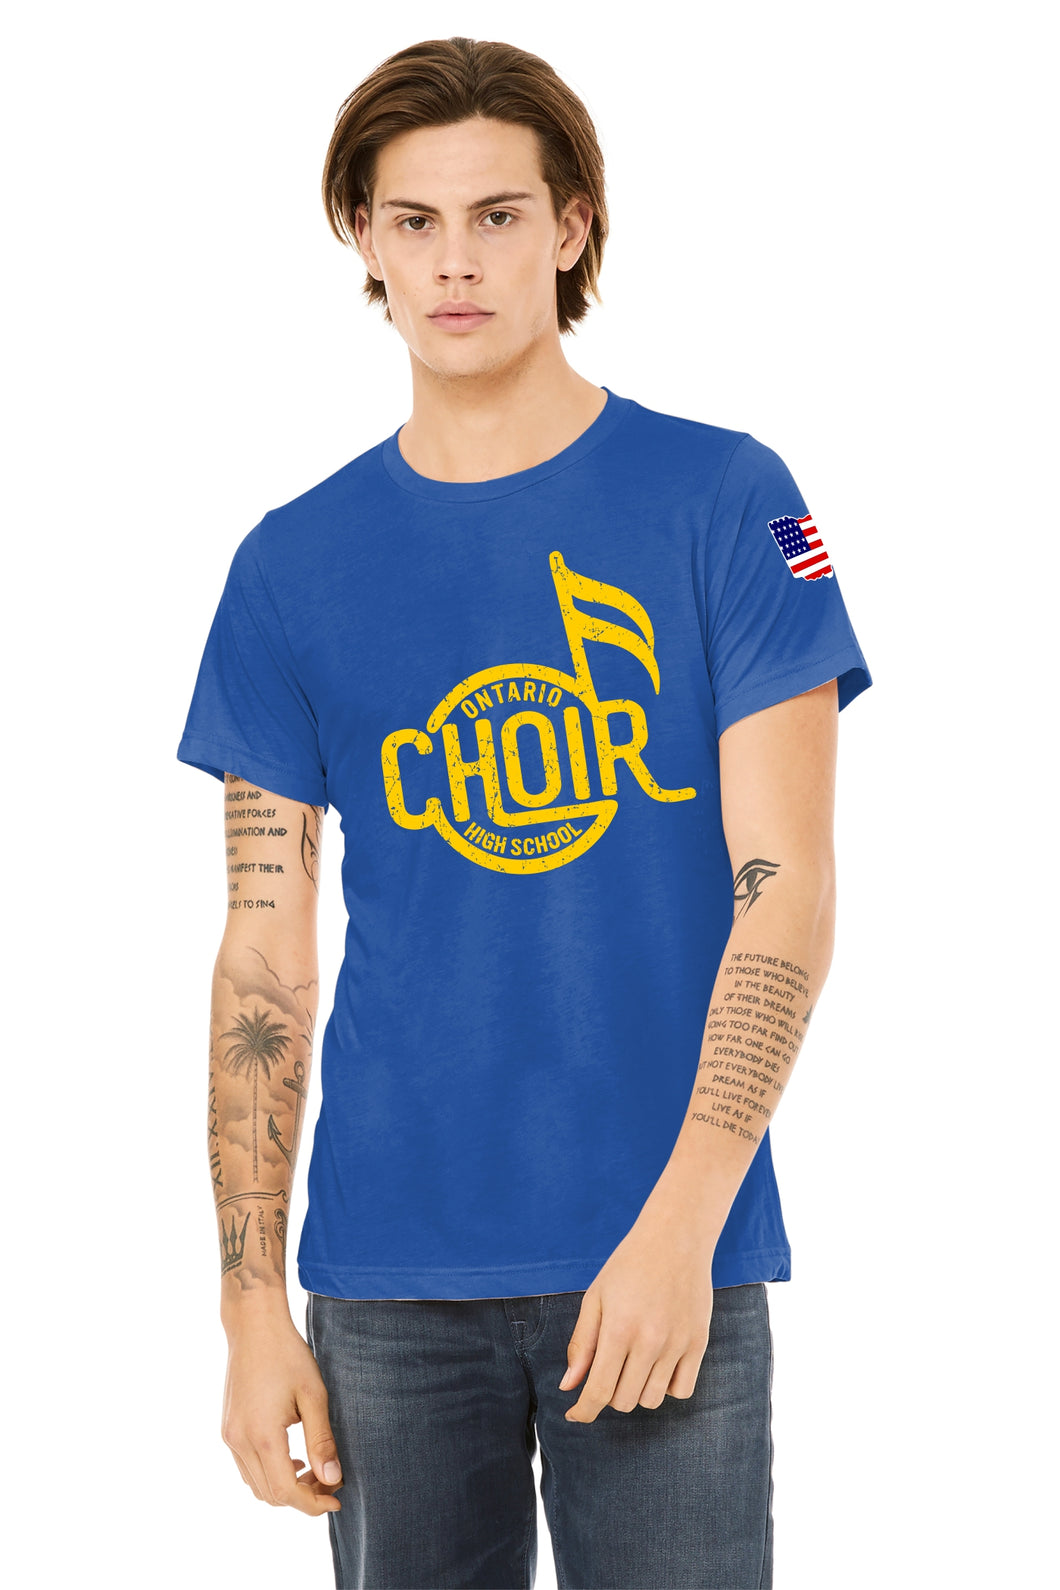 Choir Unisex